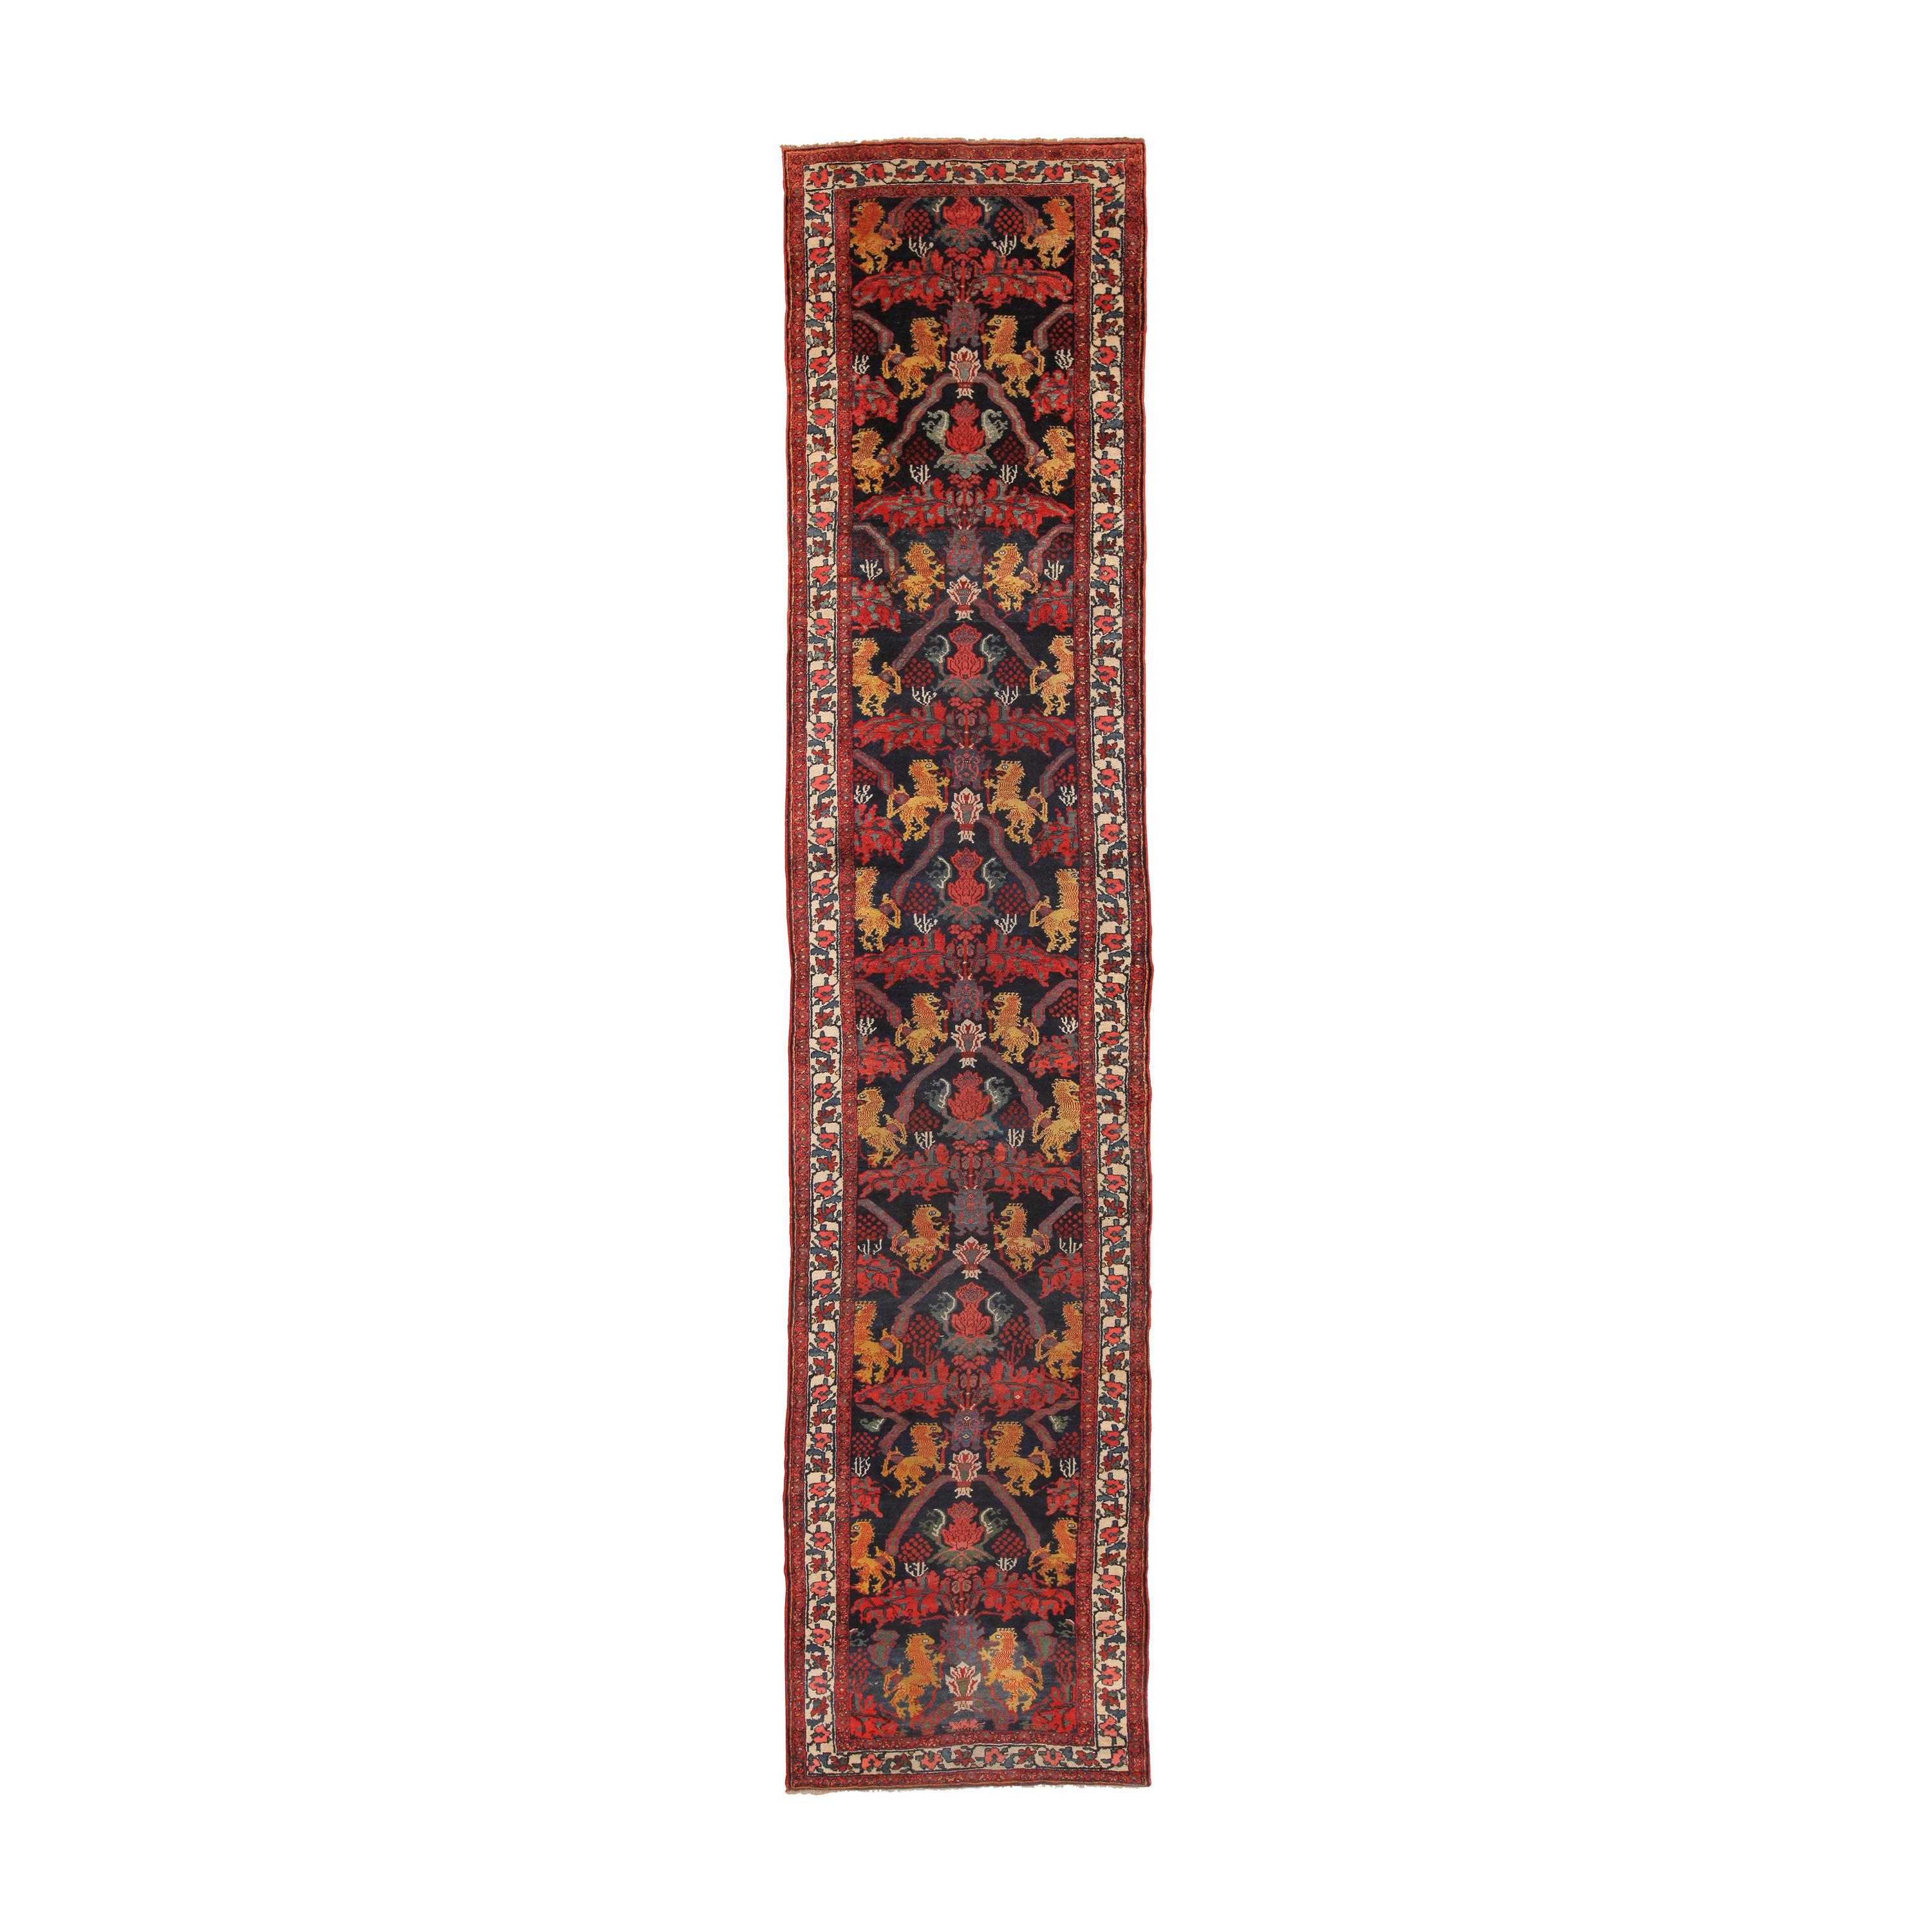 Antique Persian Kurdish Bidjar Runner Rug. Size: 3 ft 7 in x 16 ft 2 in